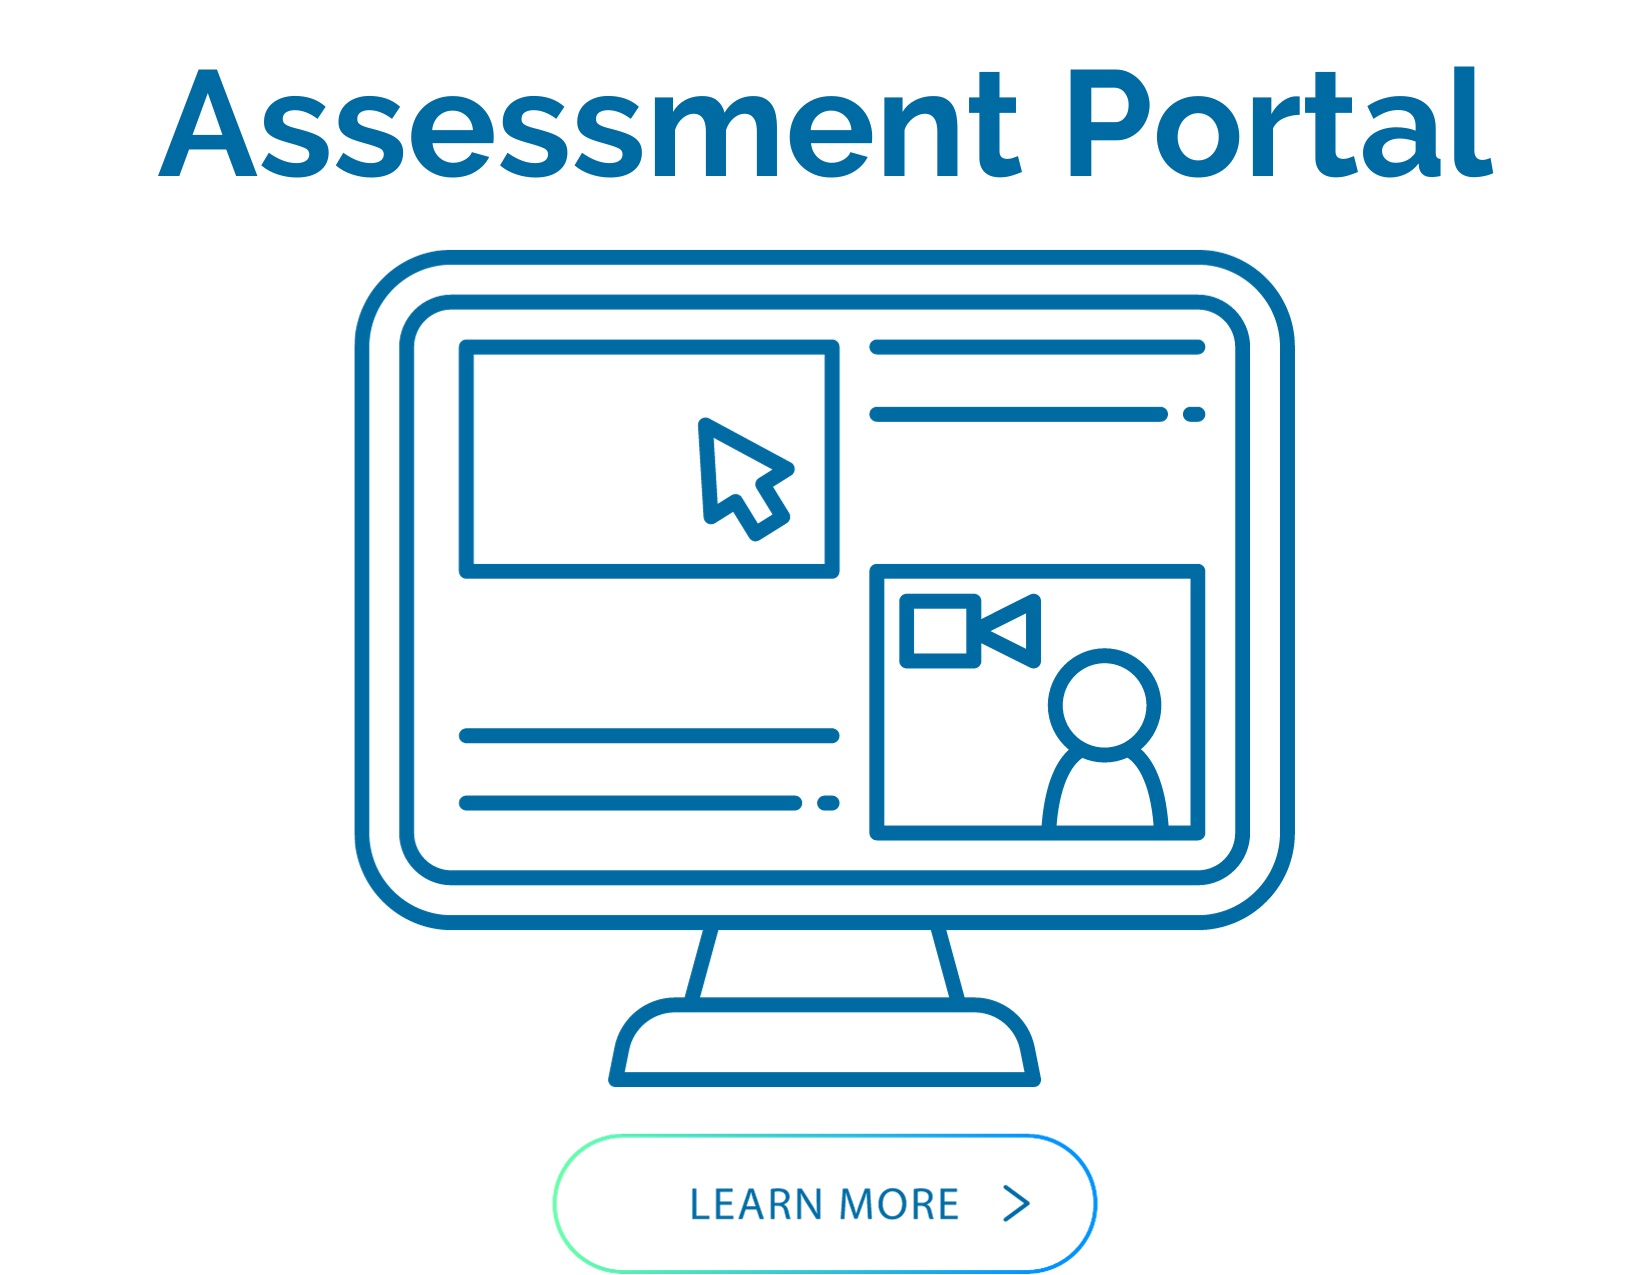 Assessment Portal Image